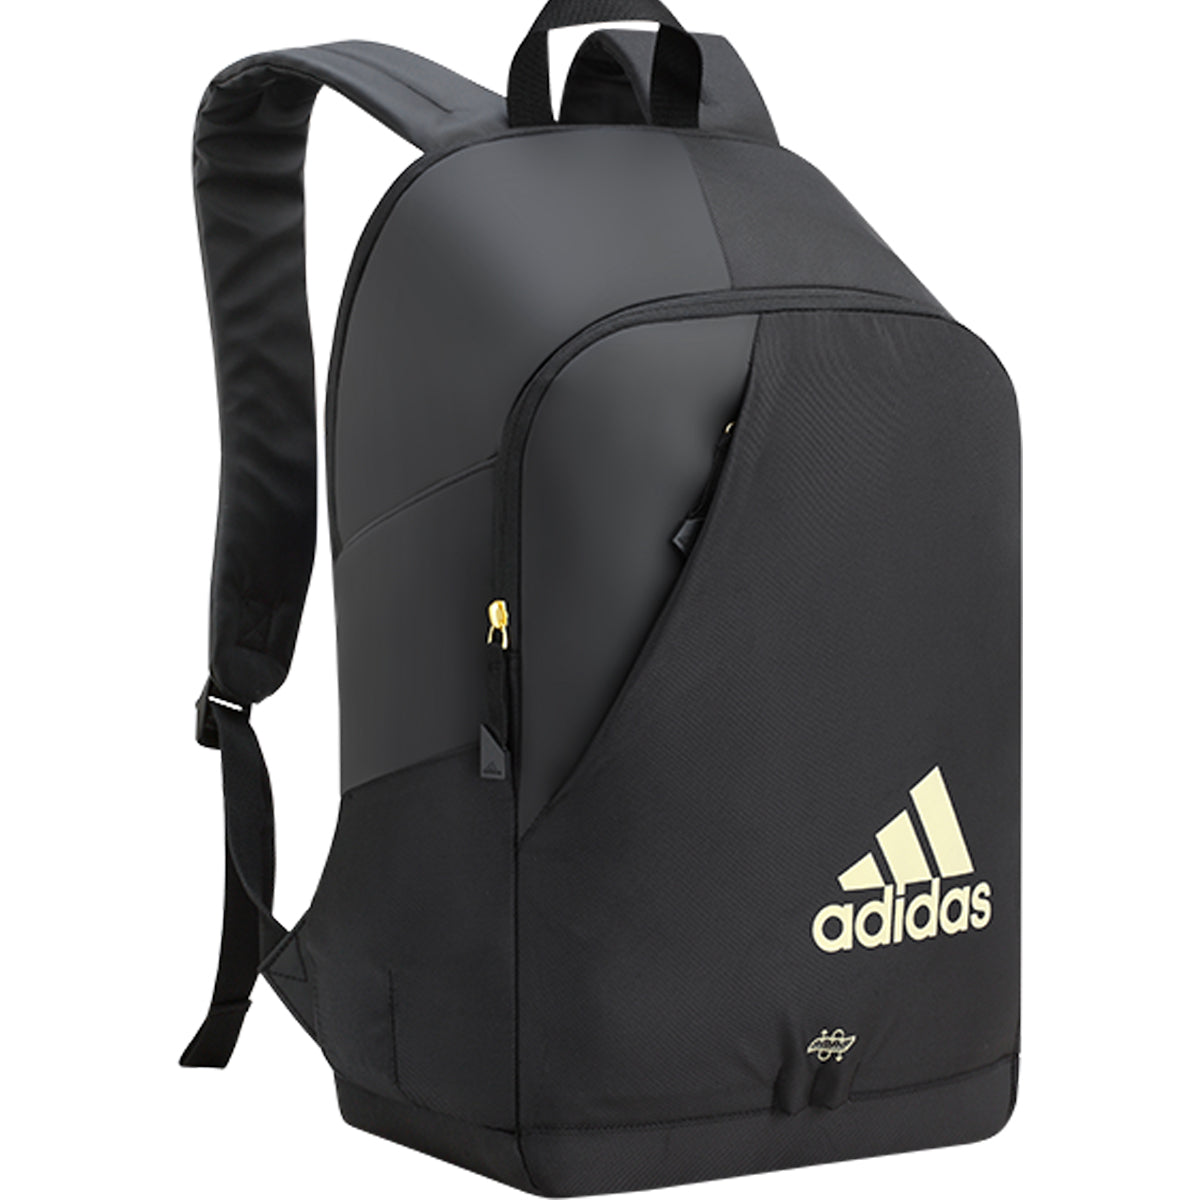 Adidas VS .6 Hockey Backpack available at Uniformity